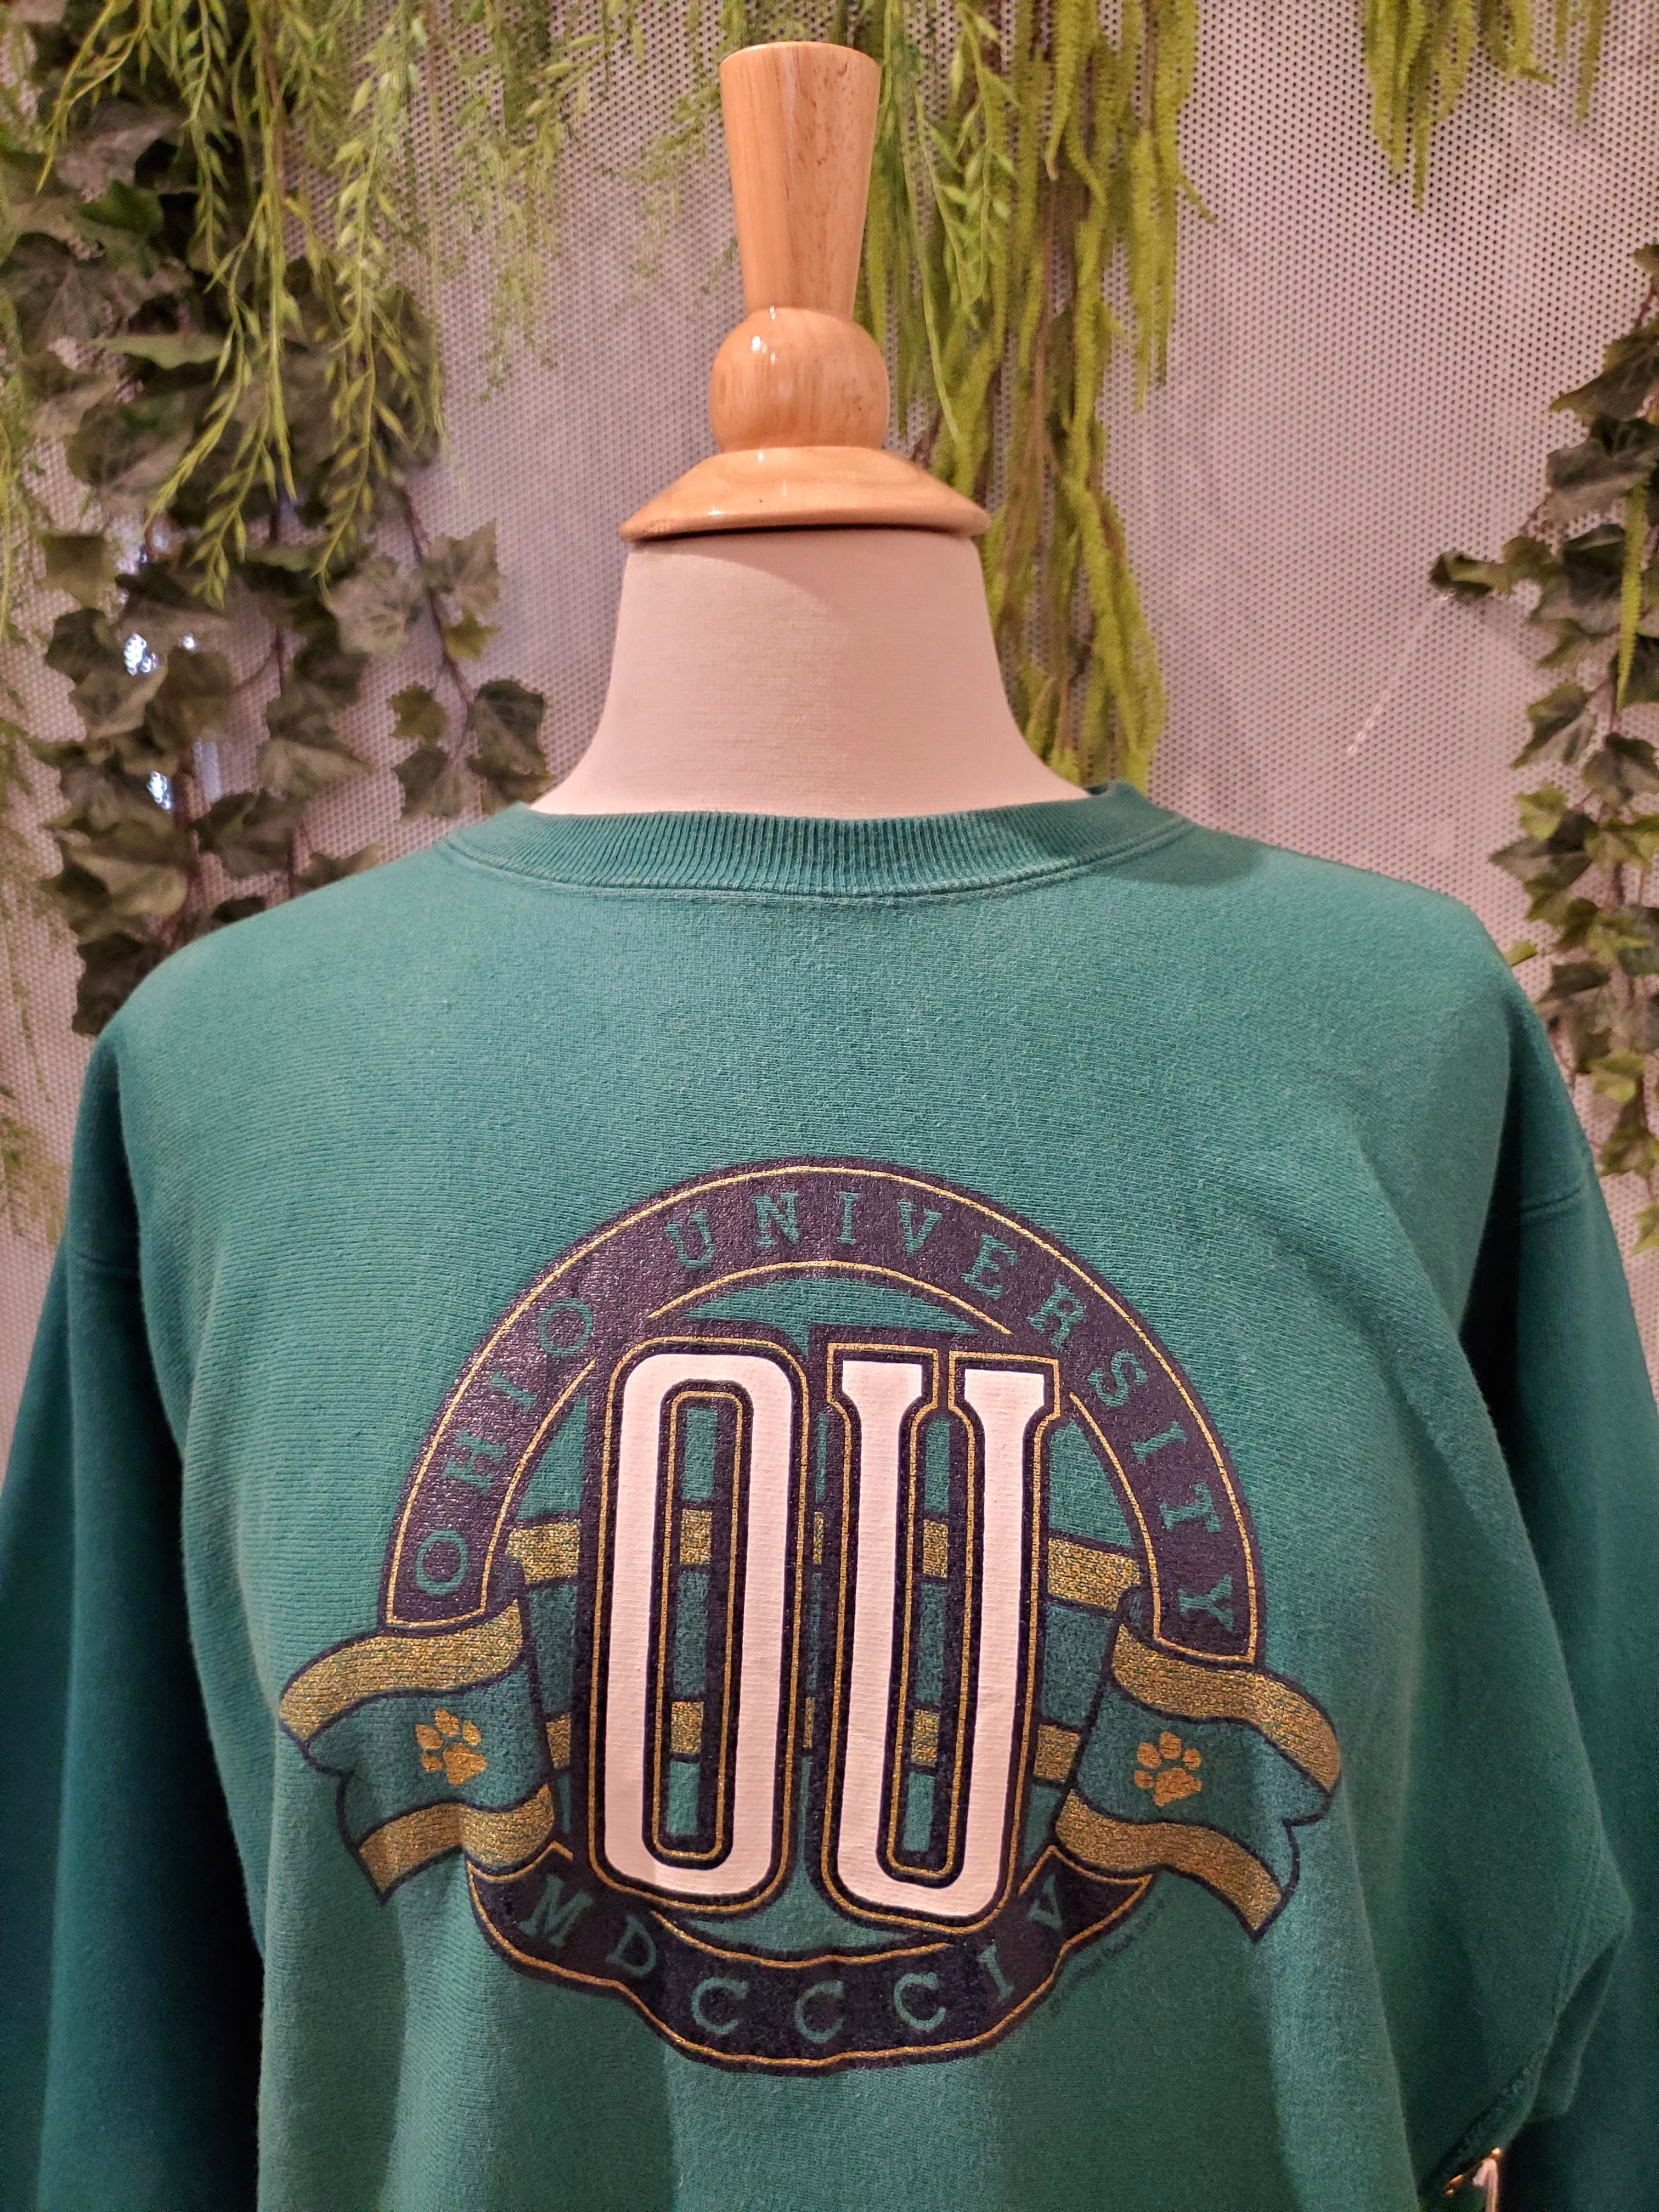 1990’s Ohio University Sweatshirt